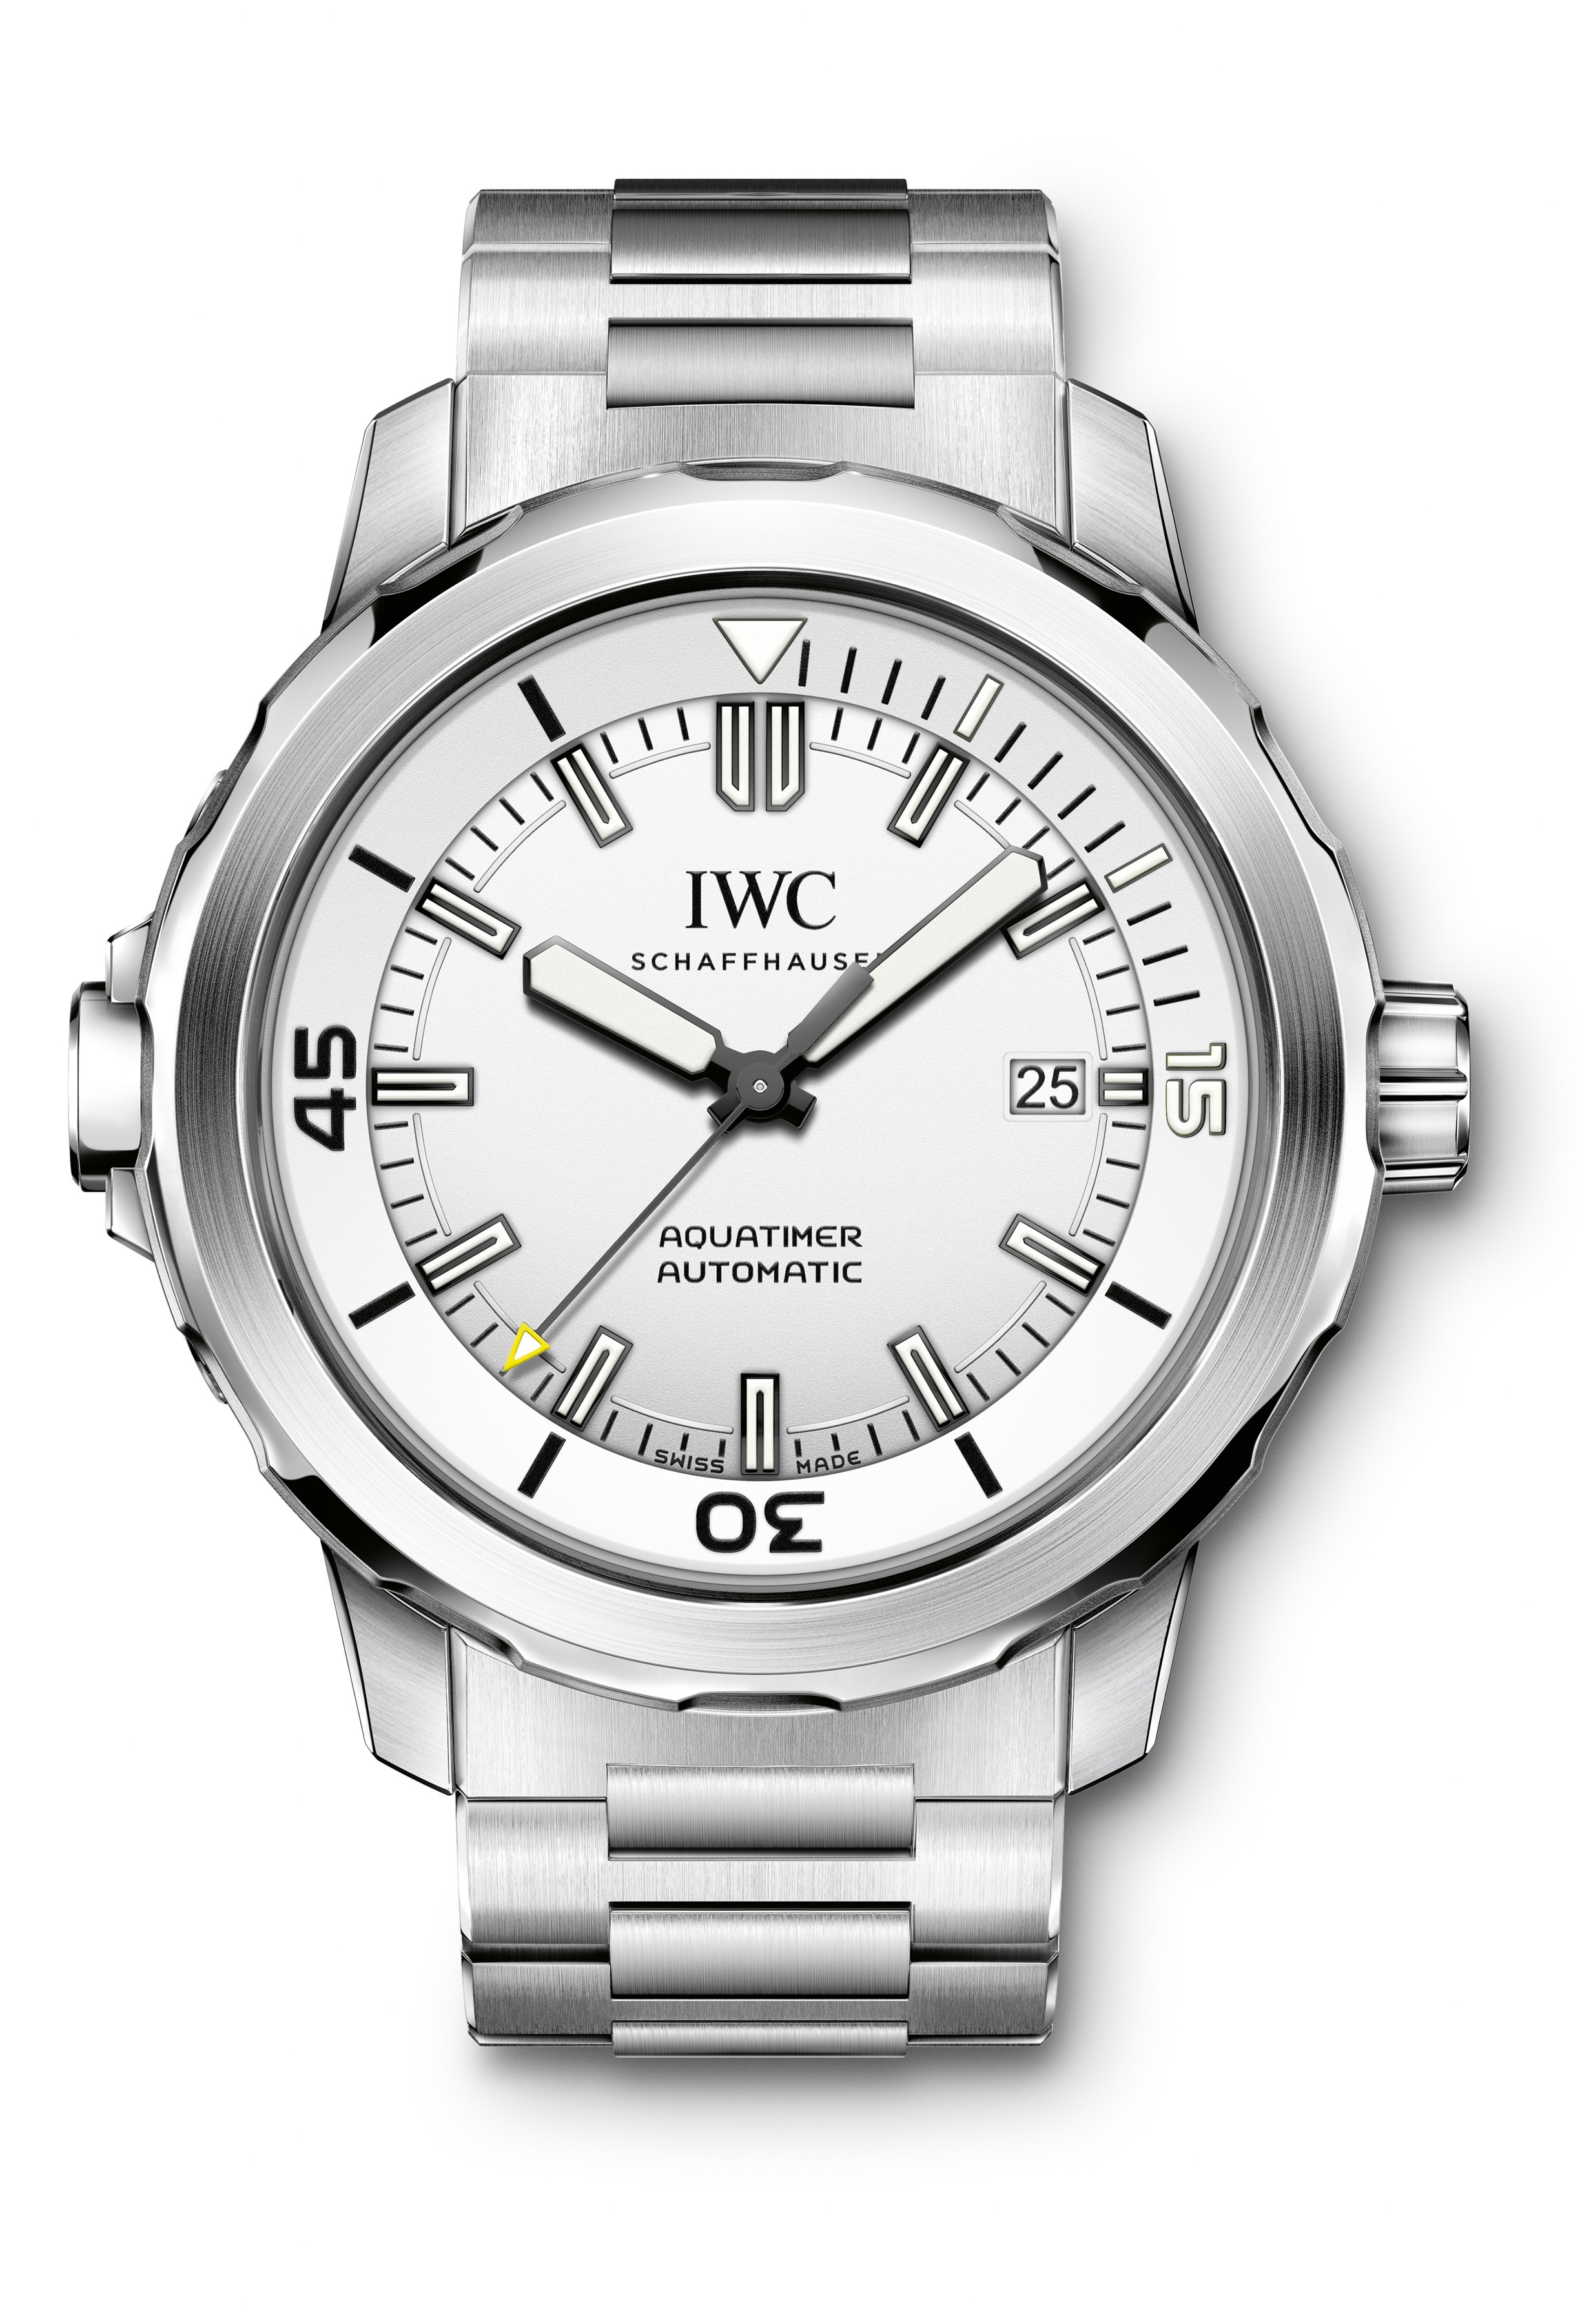 IWC Aquatimer Automatico Cronografo reloj